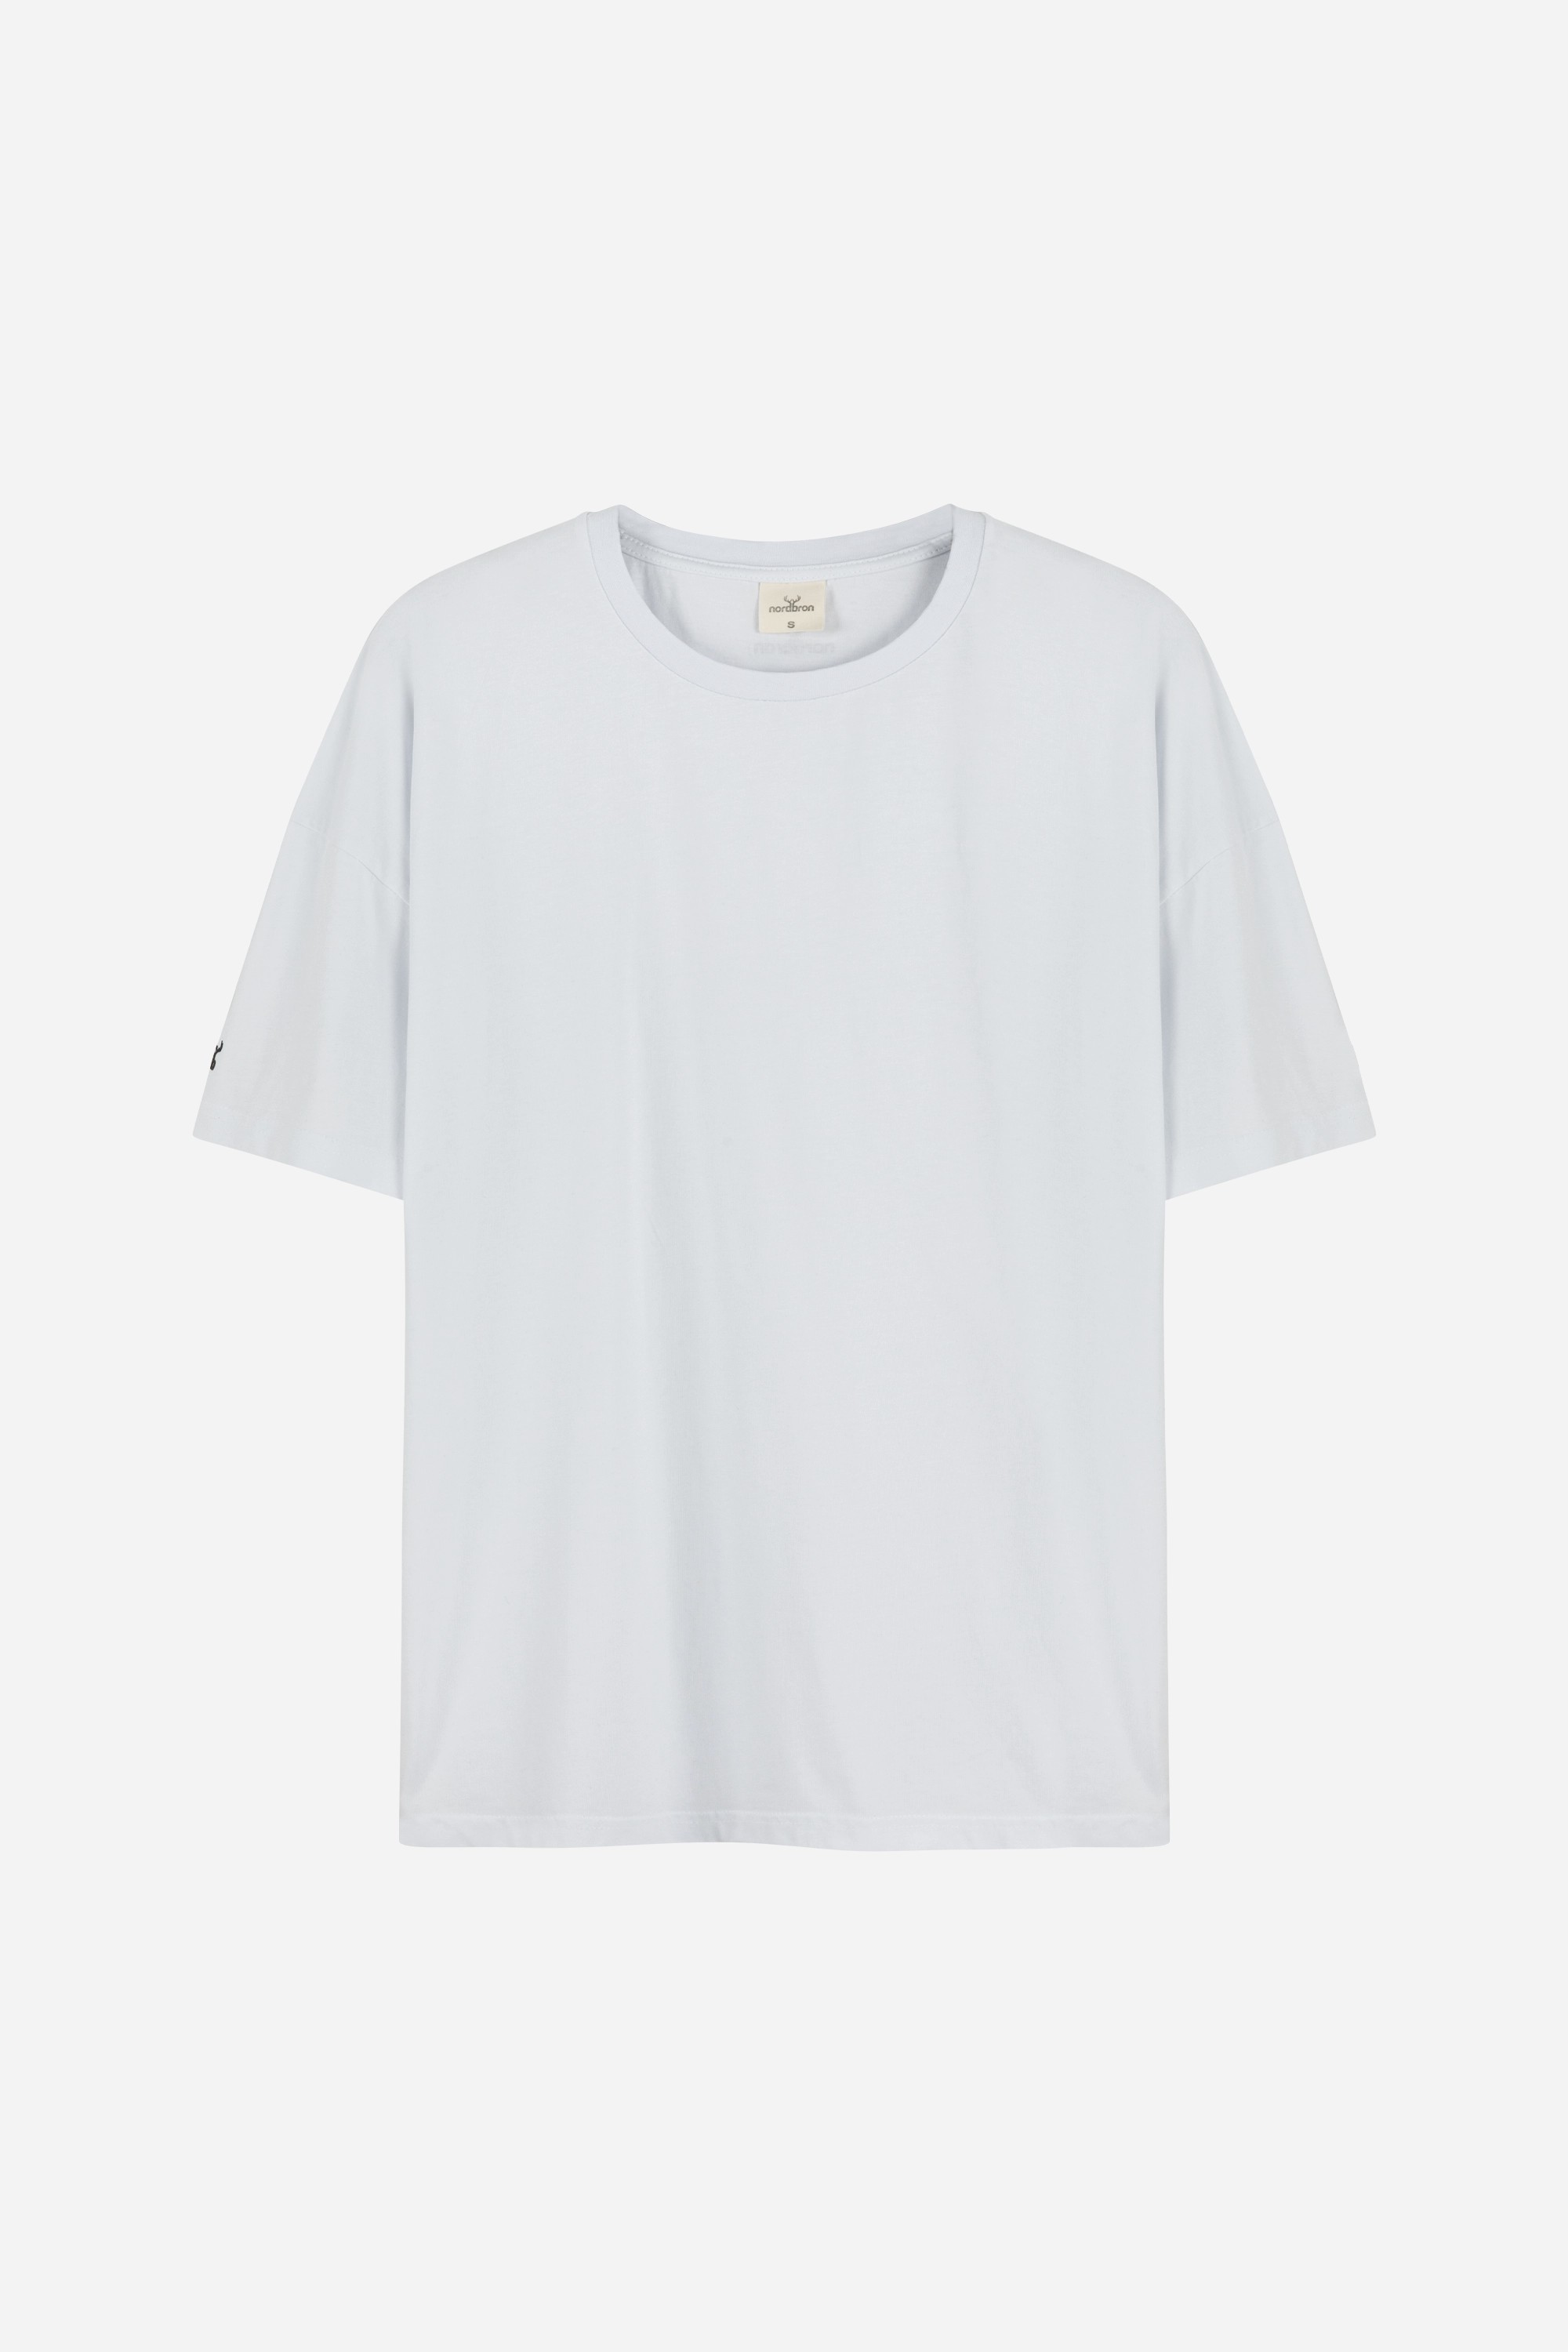 Stuga Nordbron Oversize T-shirt - White